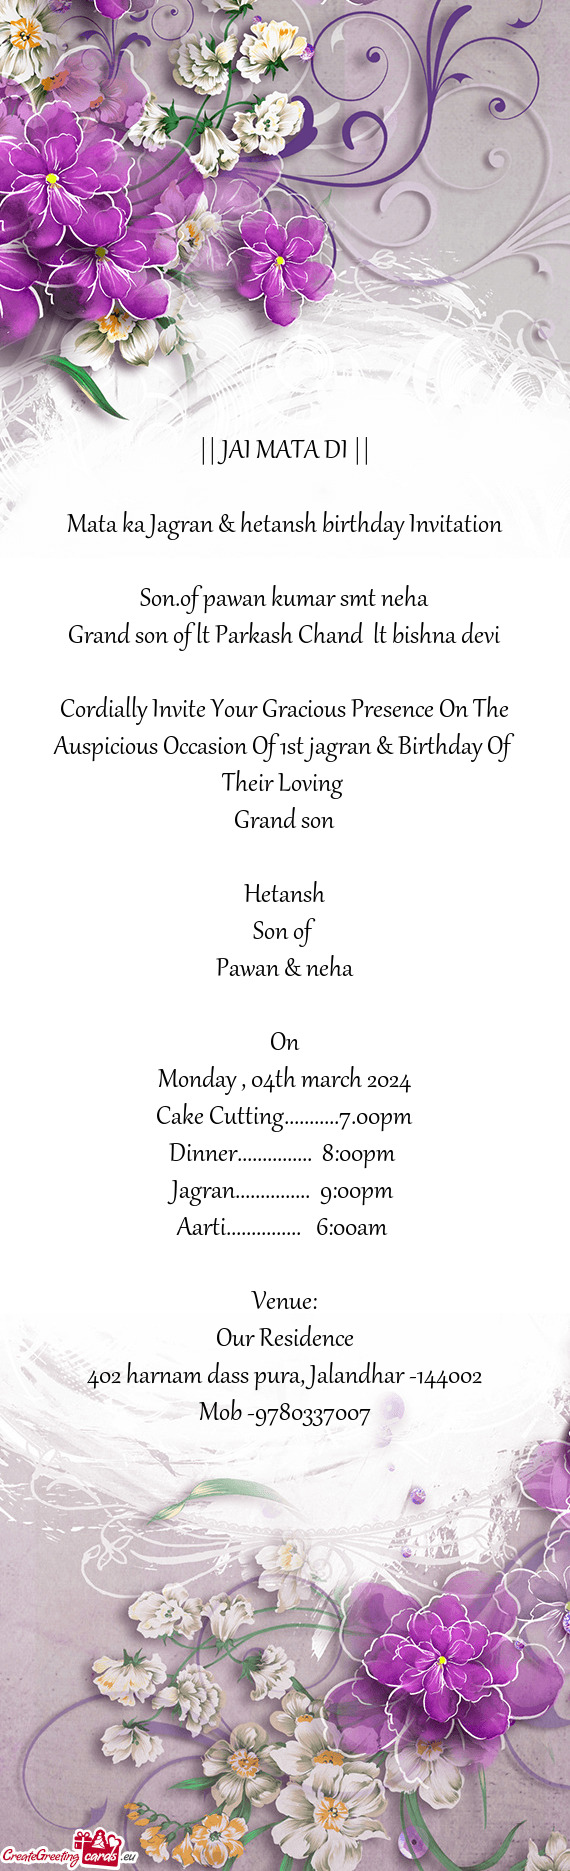 Mata ka Jagran & hetansh birthday Invitation